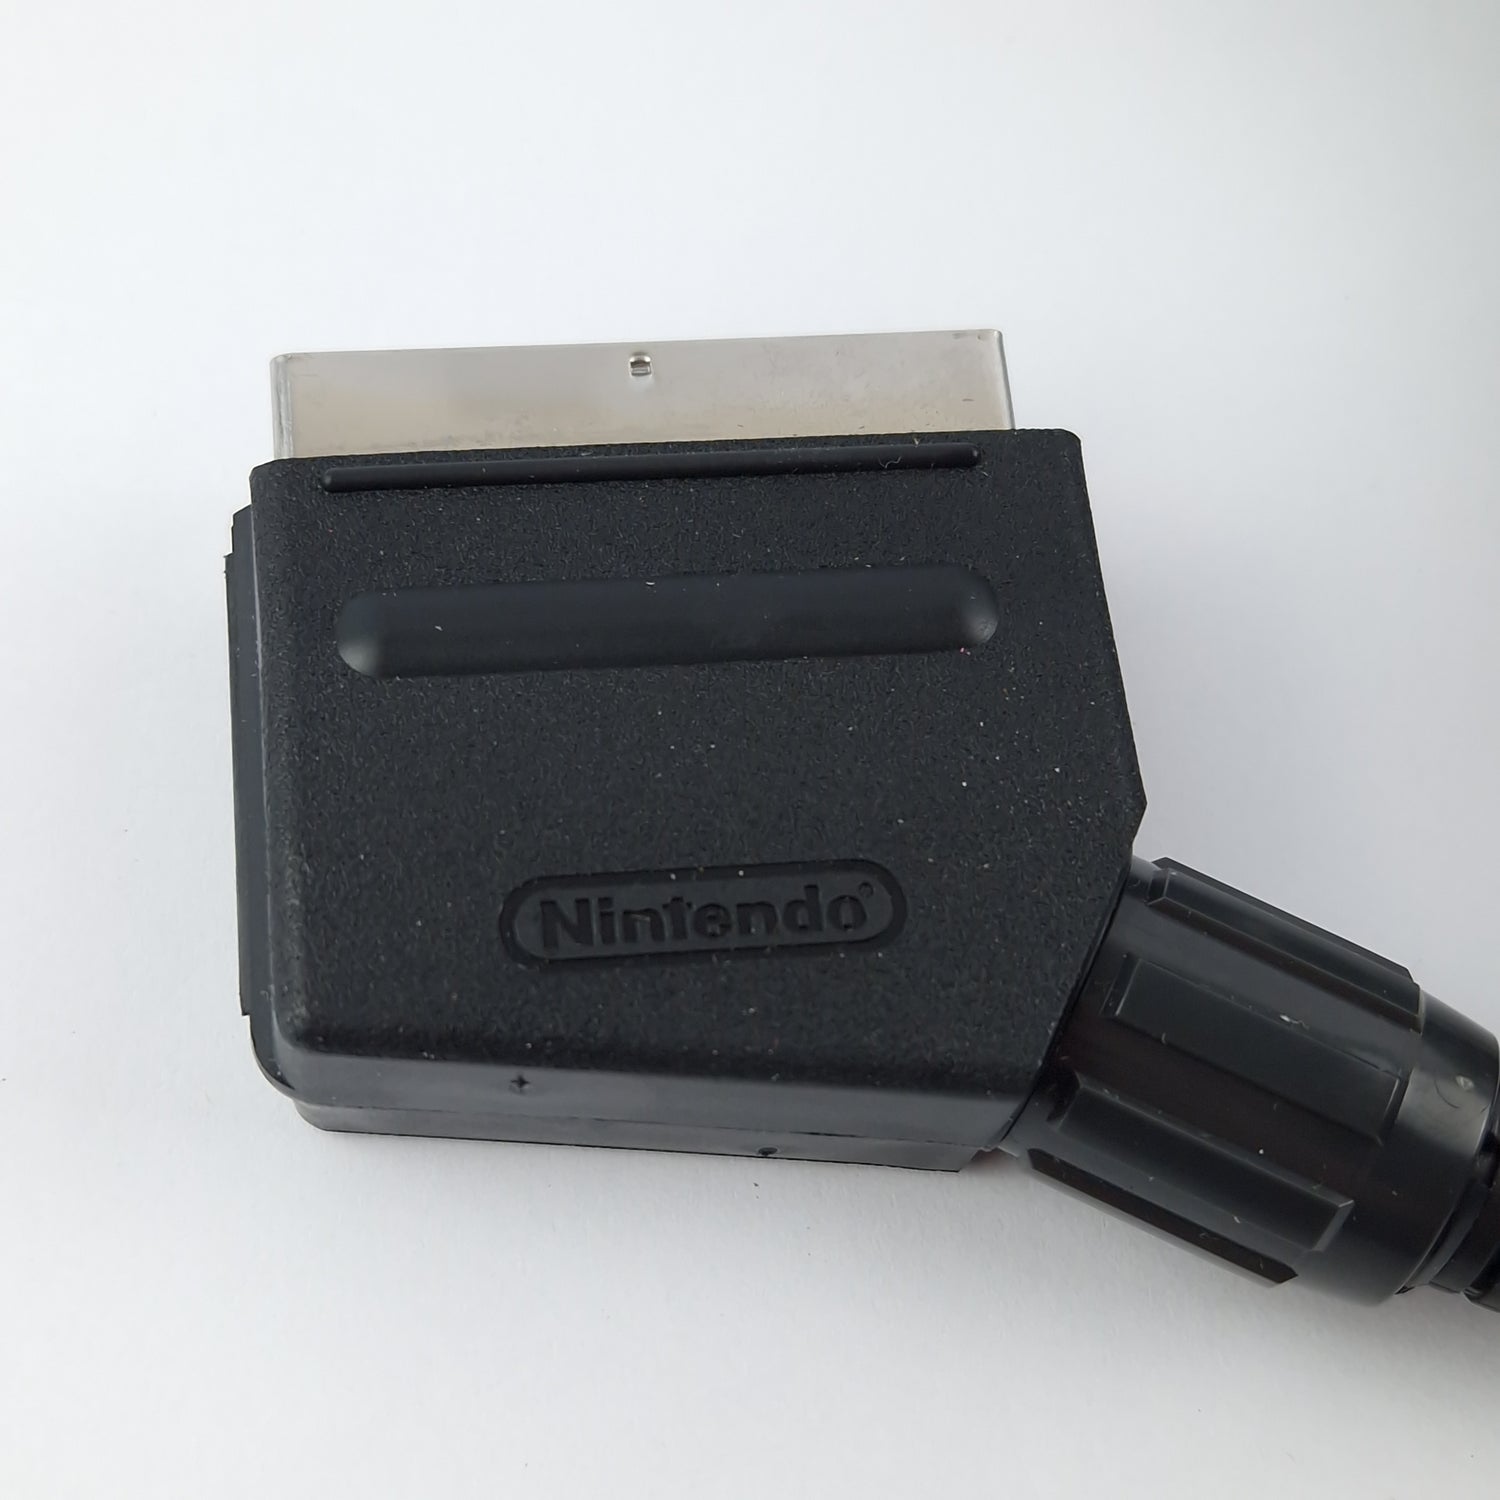 Nintendo Gamecube Accessories: Original RGB Cable RVB / RGB CABLE - OVP GC PAL